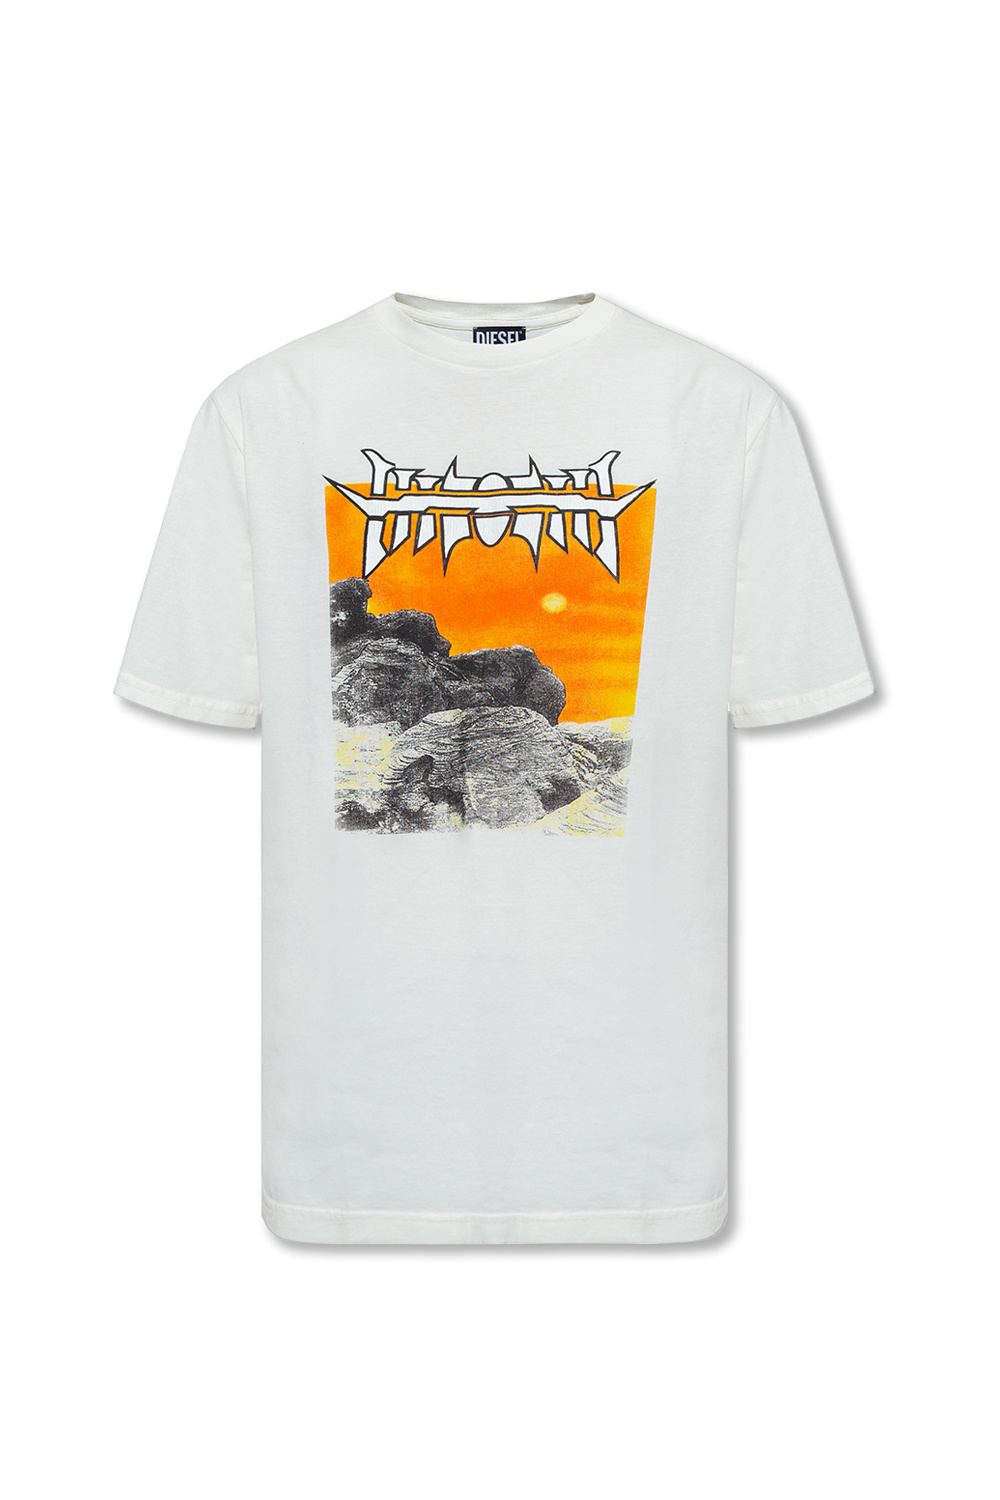 StclaircomoShops | Diesel \'T - melange Clothing t 1 clubwear vsct shirt 2 | - Just\' - printed shirt anthracite Men\'s T white on